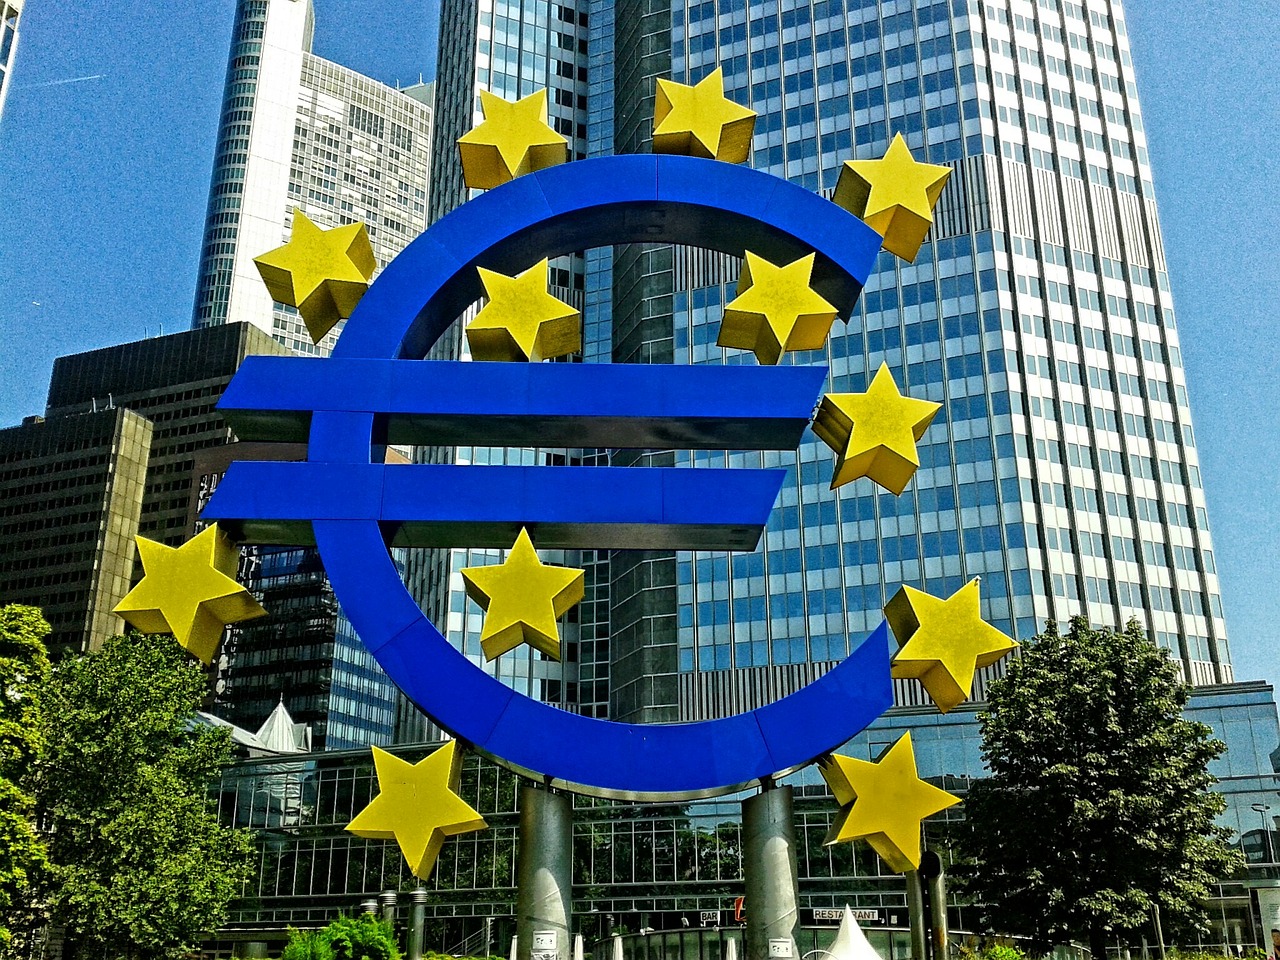 Ko će biti novi “šef eura”: Holanđanin, Finac ili čelnica MMF-a?